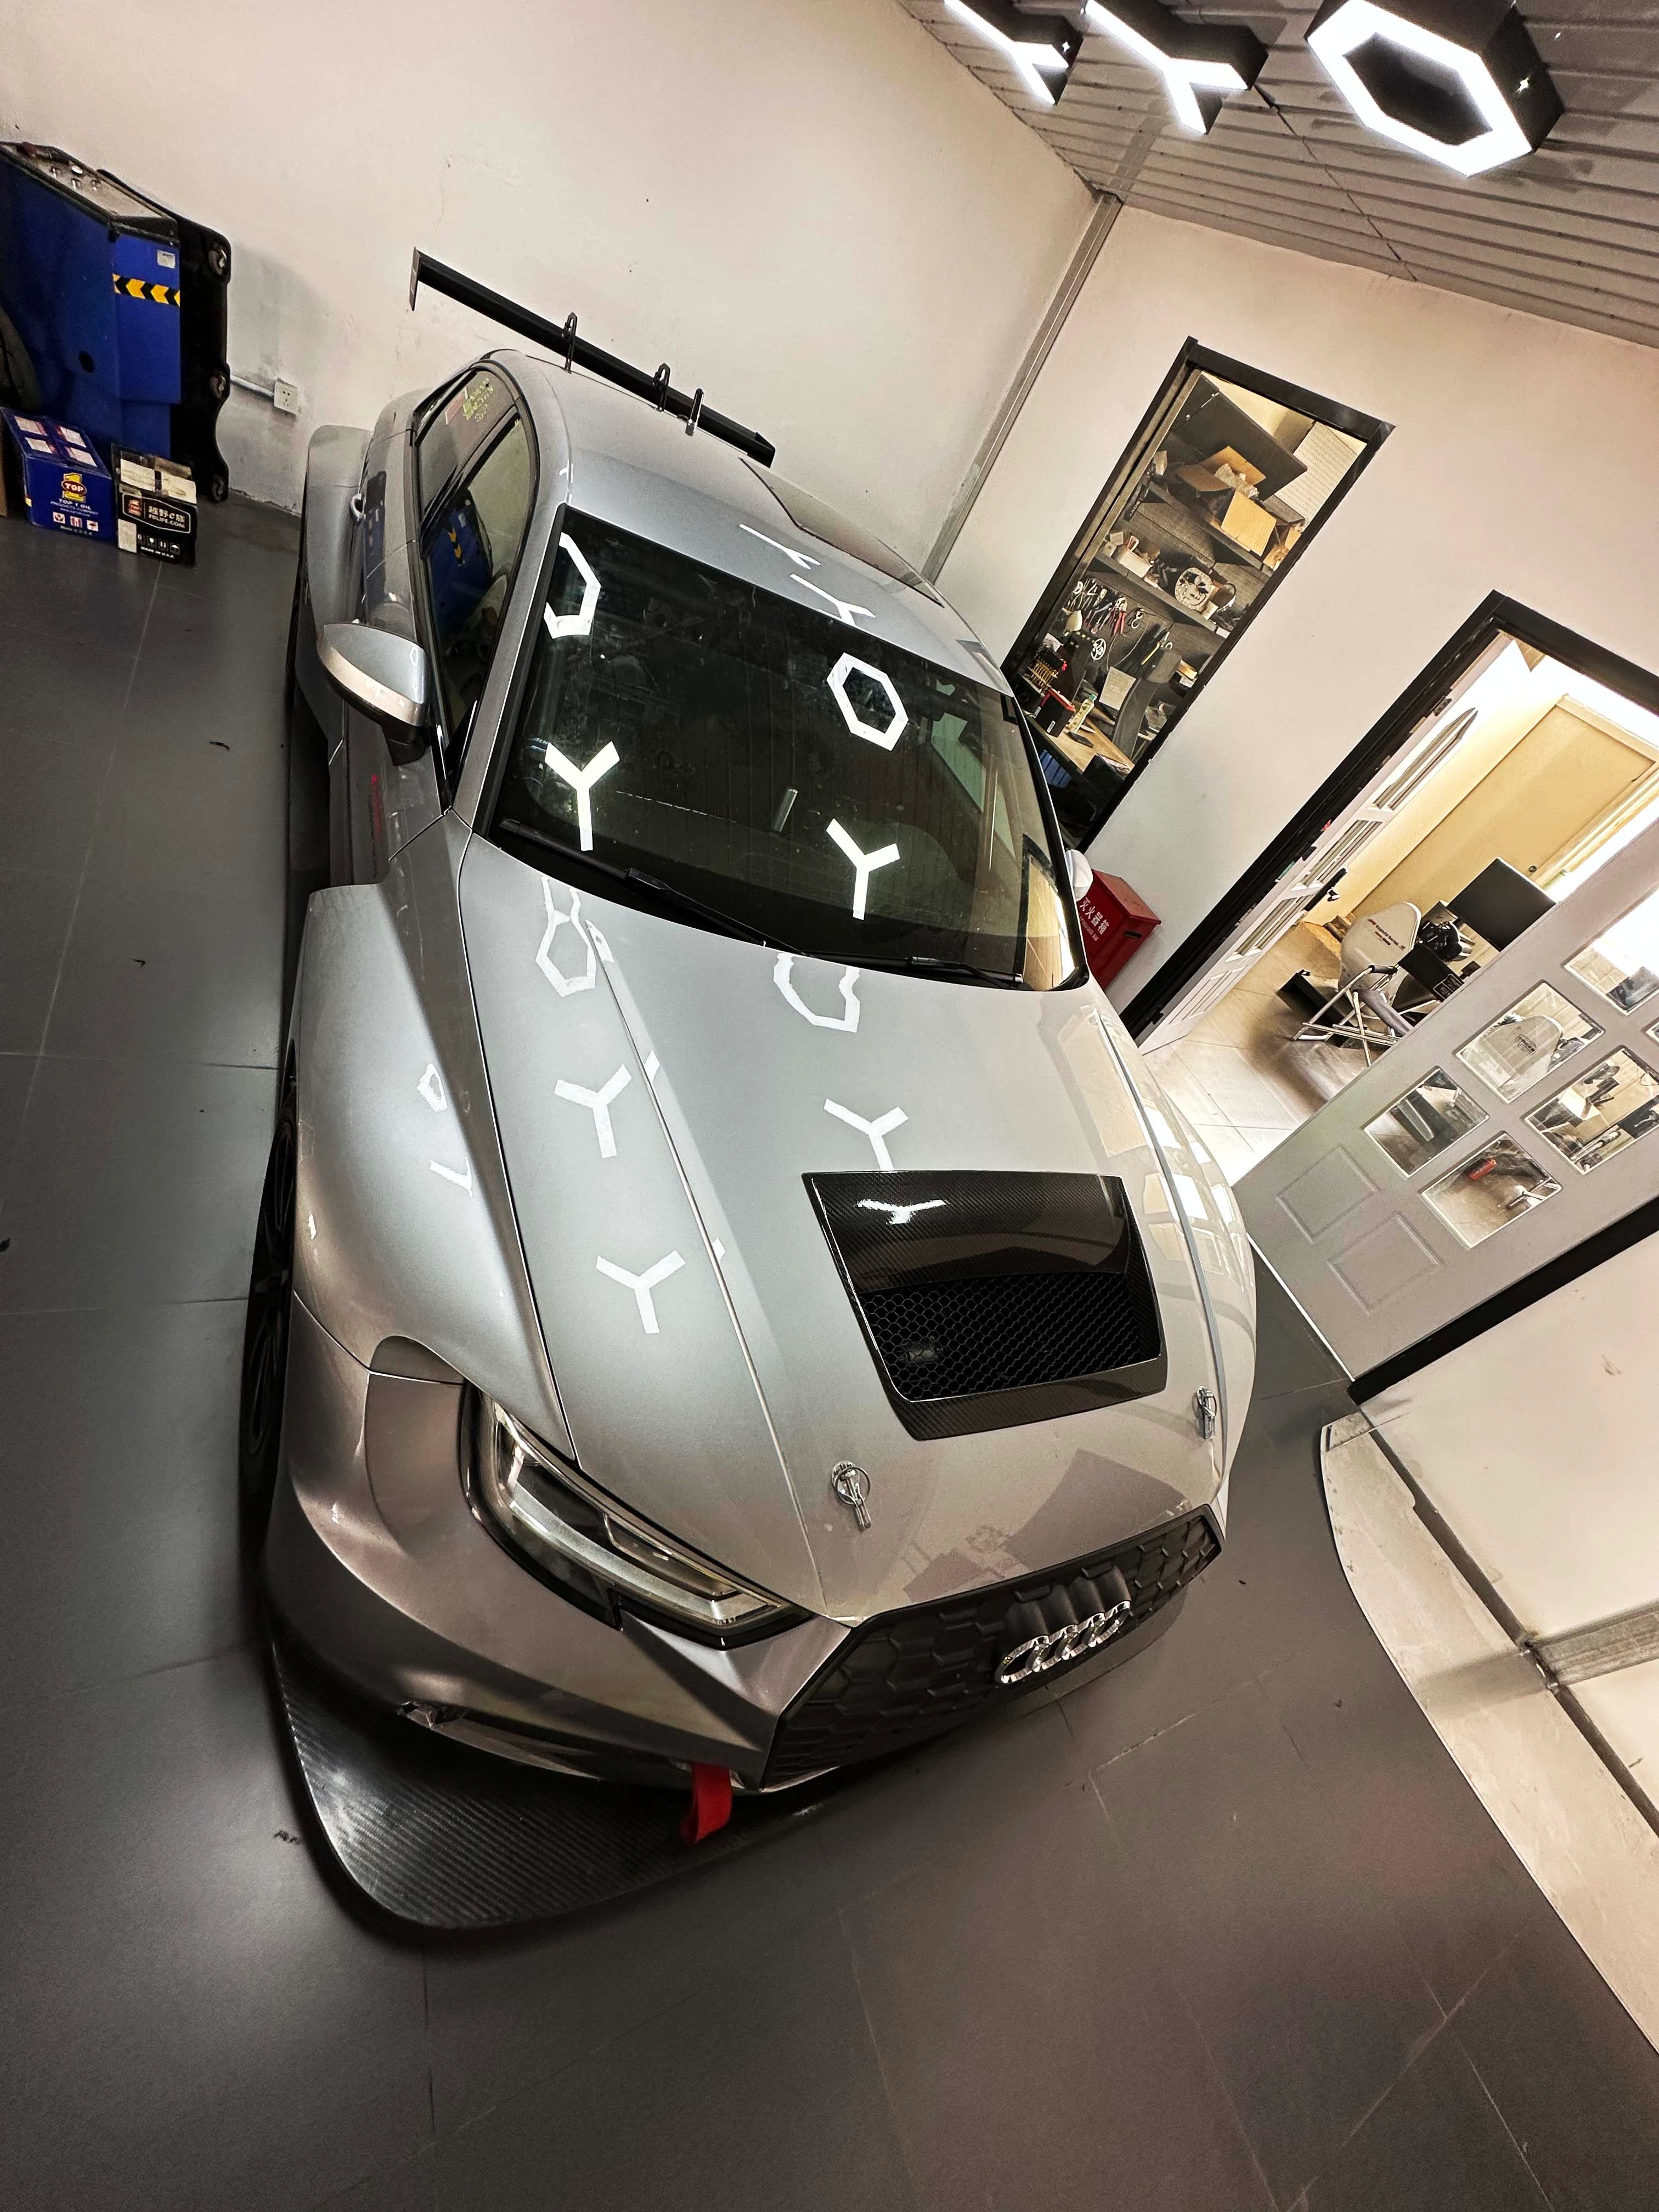 2019 Audi RS3 TCR